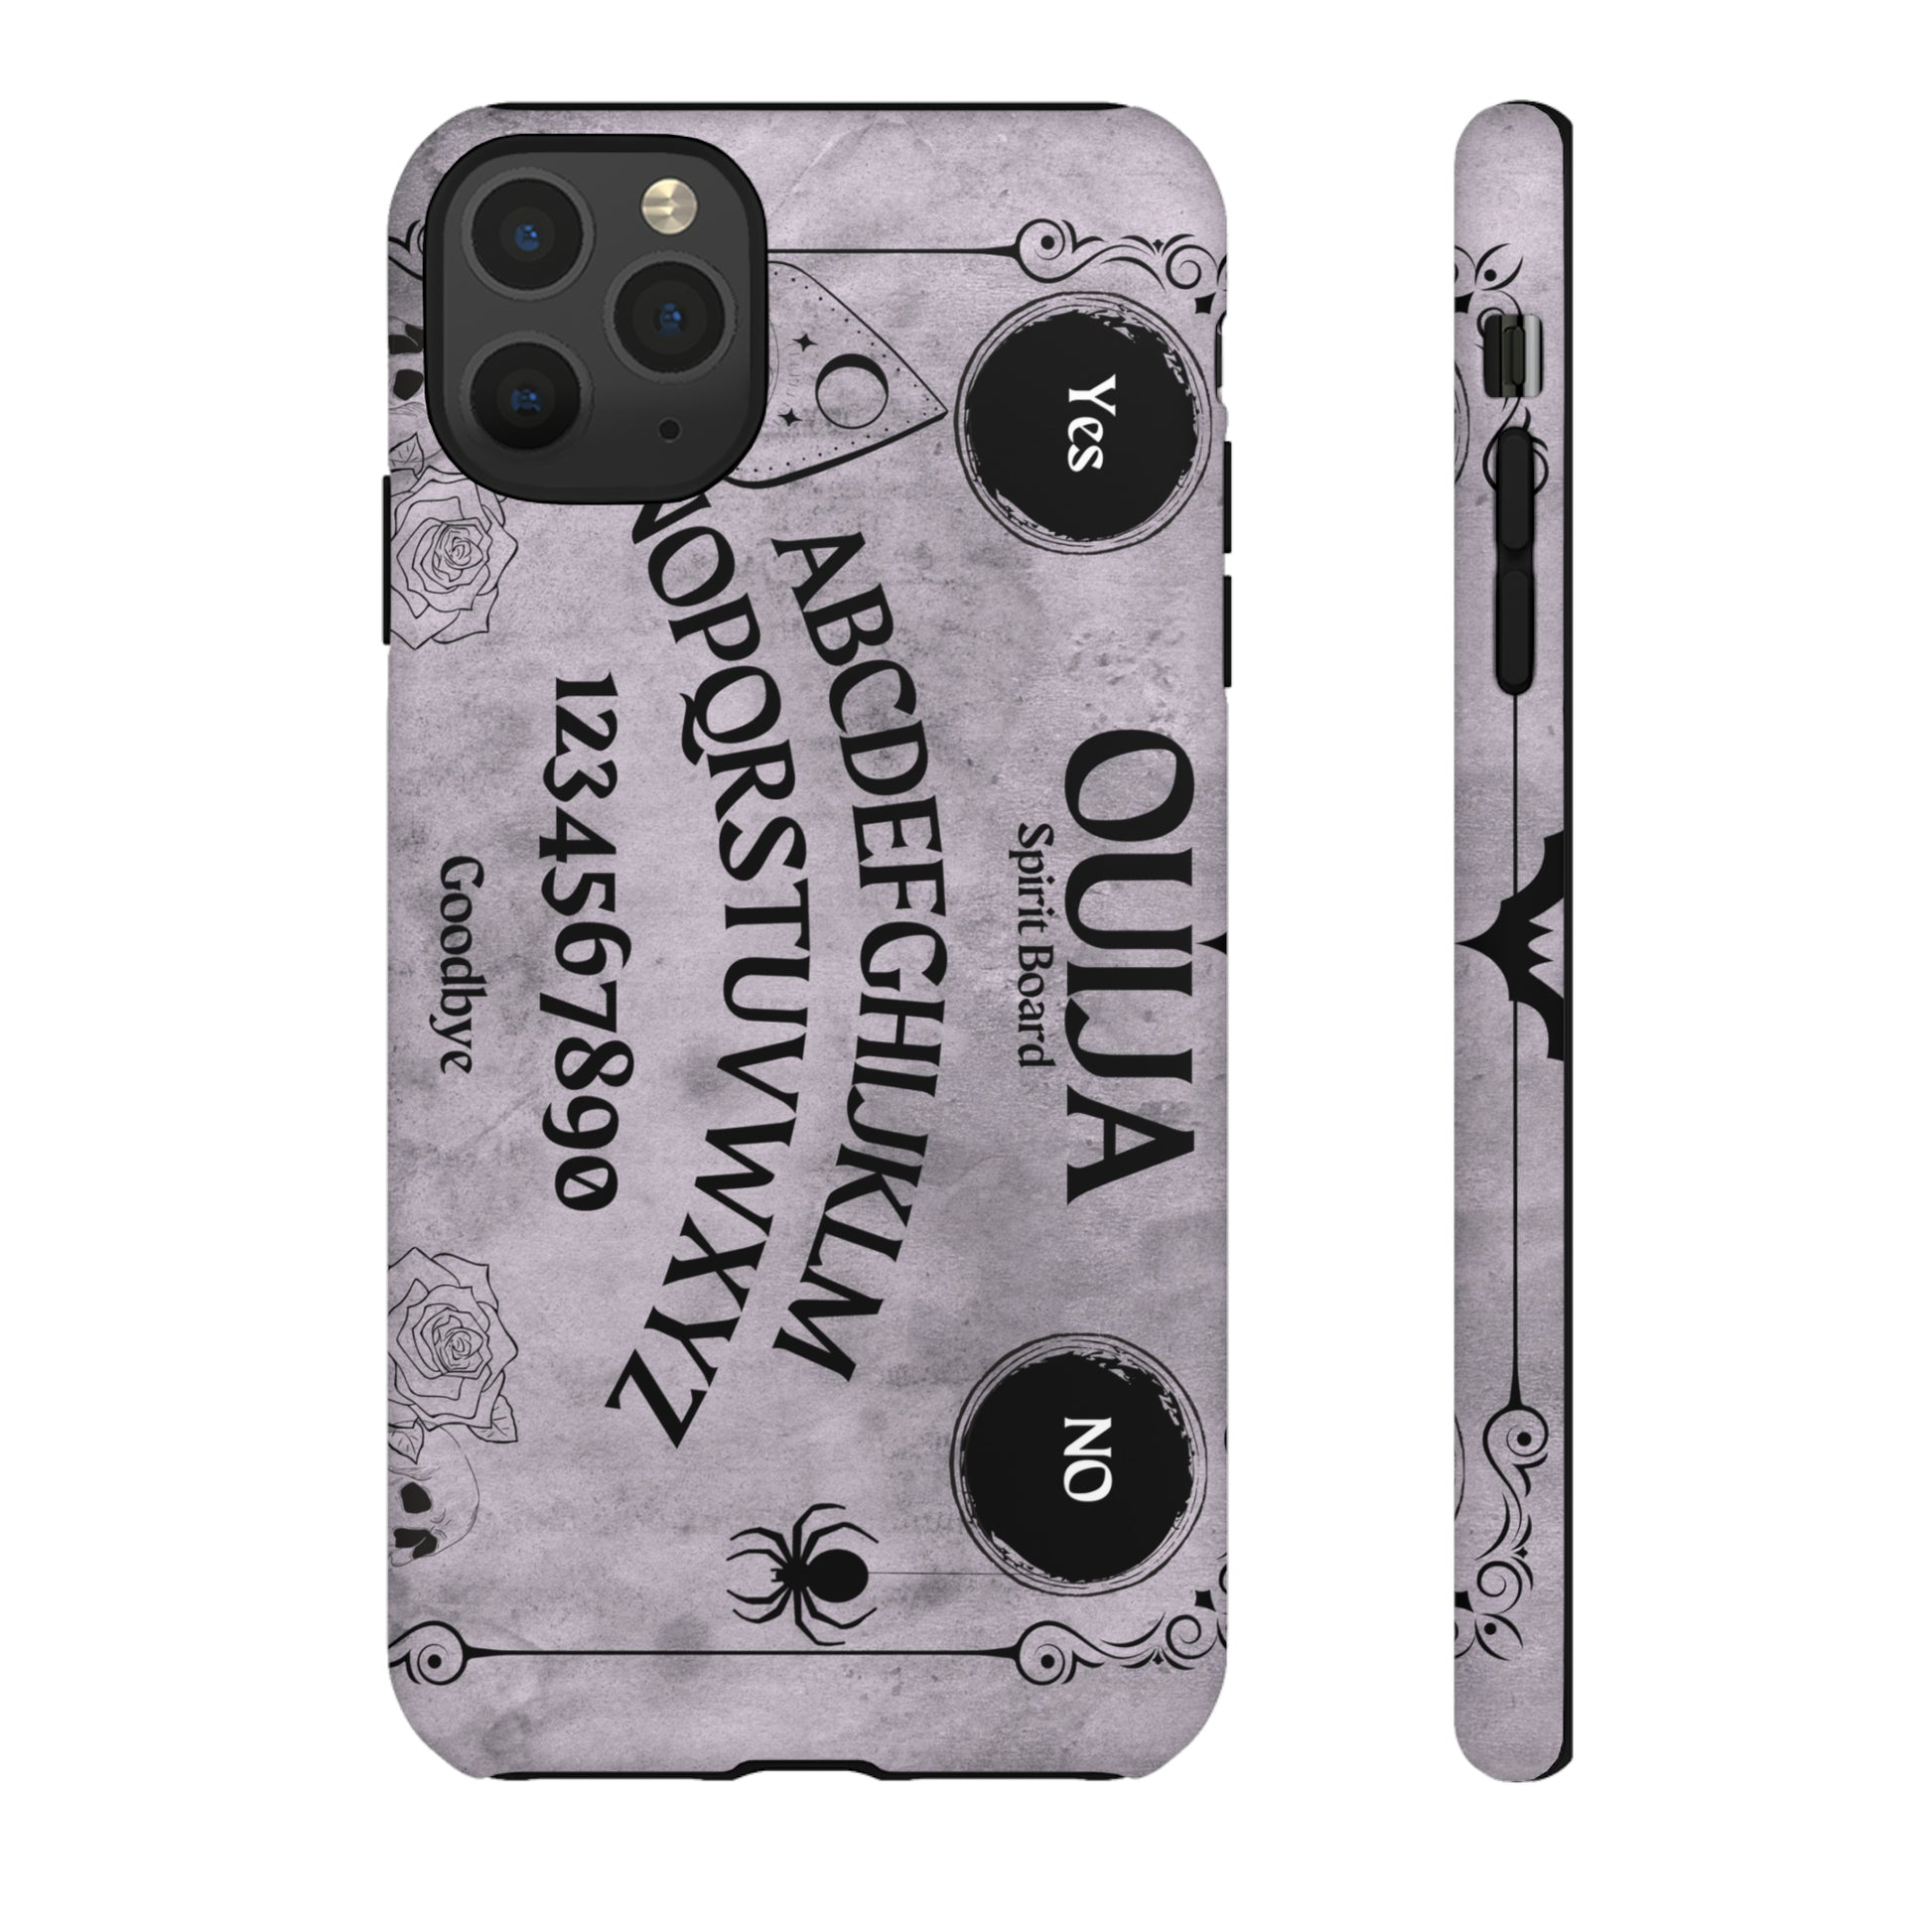 Ouija Board Tough Phone Cases For Samsung iPhone GooglePhone CaseVTZdesignsiPhone 11 Pro MaxMatteAccessoriesGlossyhalloween